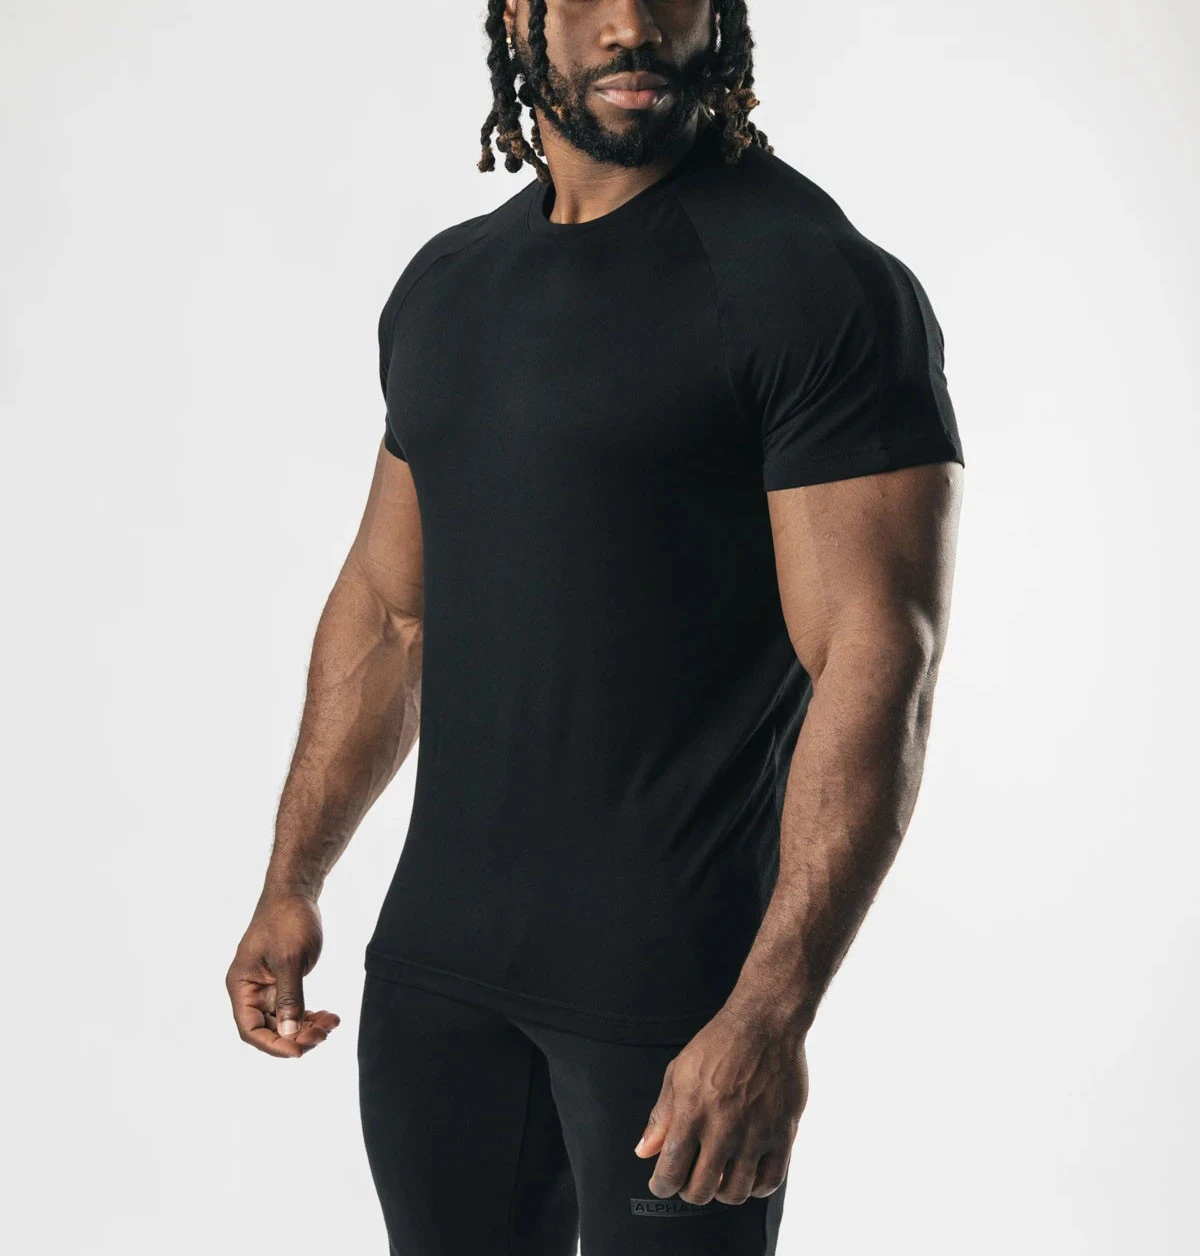 Wholesale Men Gym Fitness Workout Quick Dry Active Wear T-Shirt